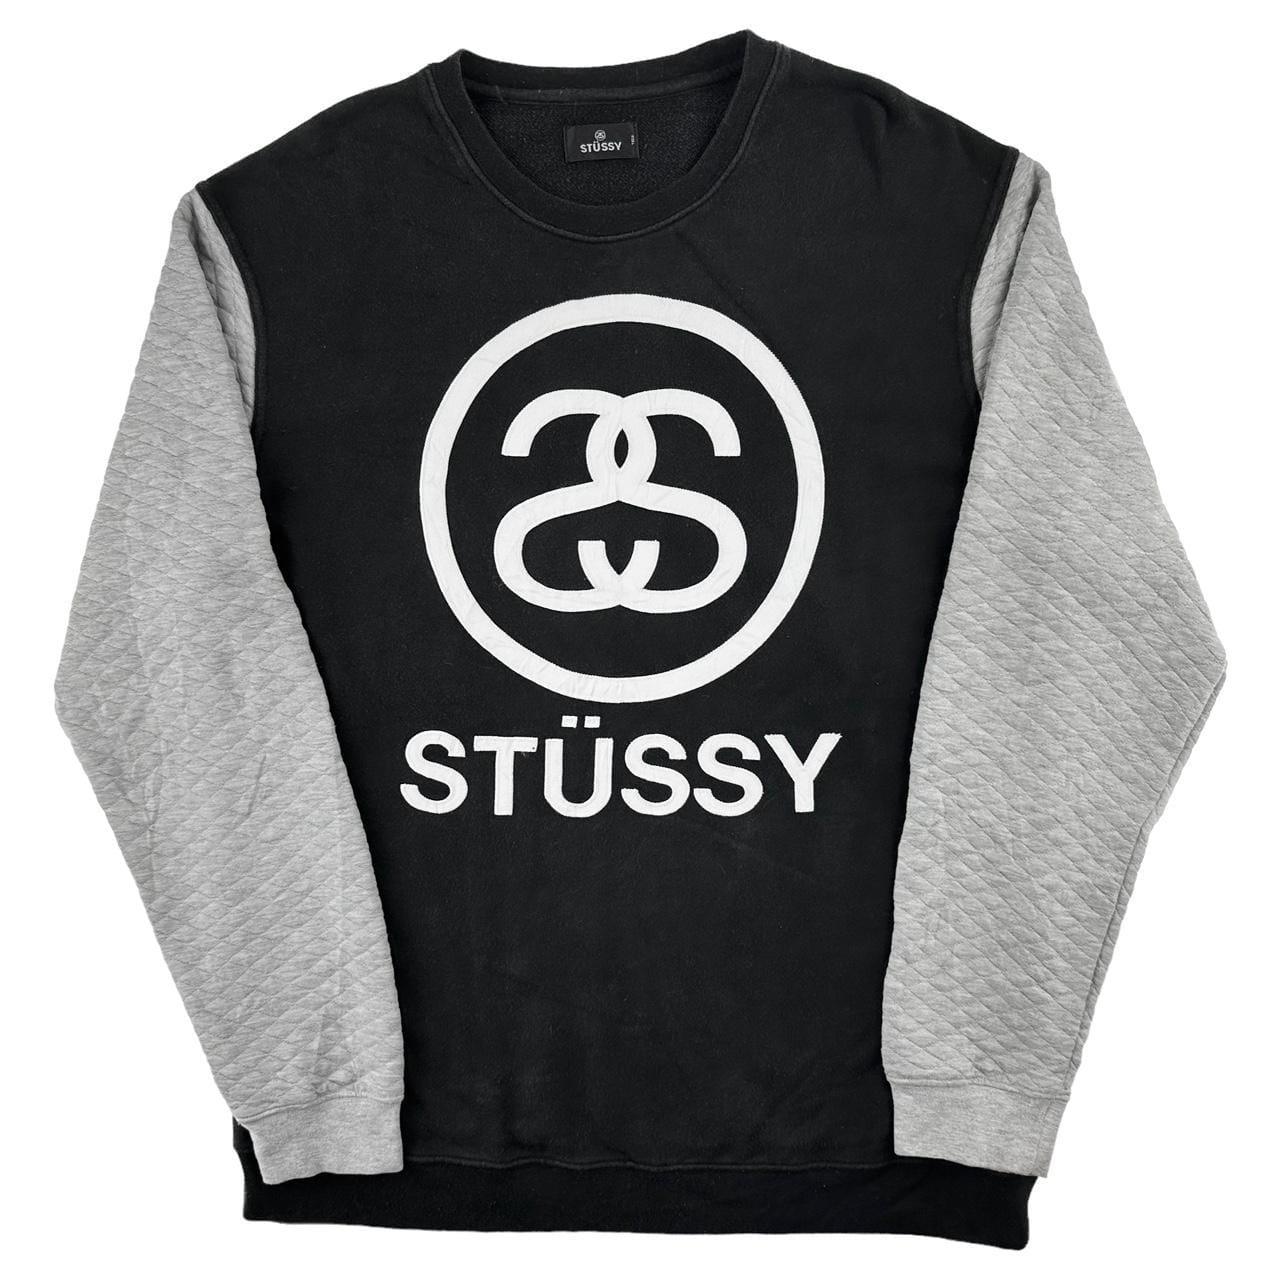 Stussy logo jumper sweatshirt size L - Known Source